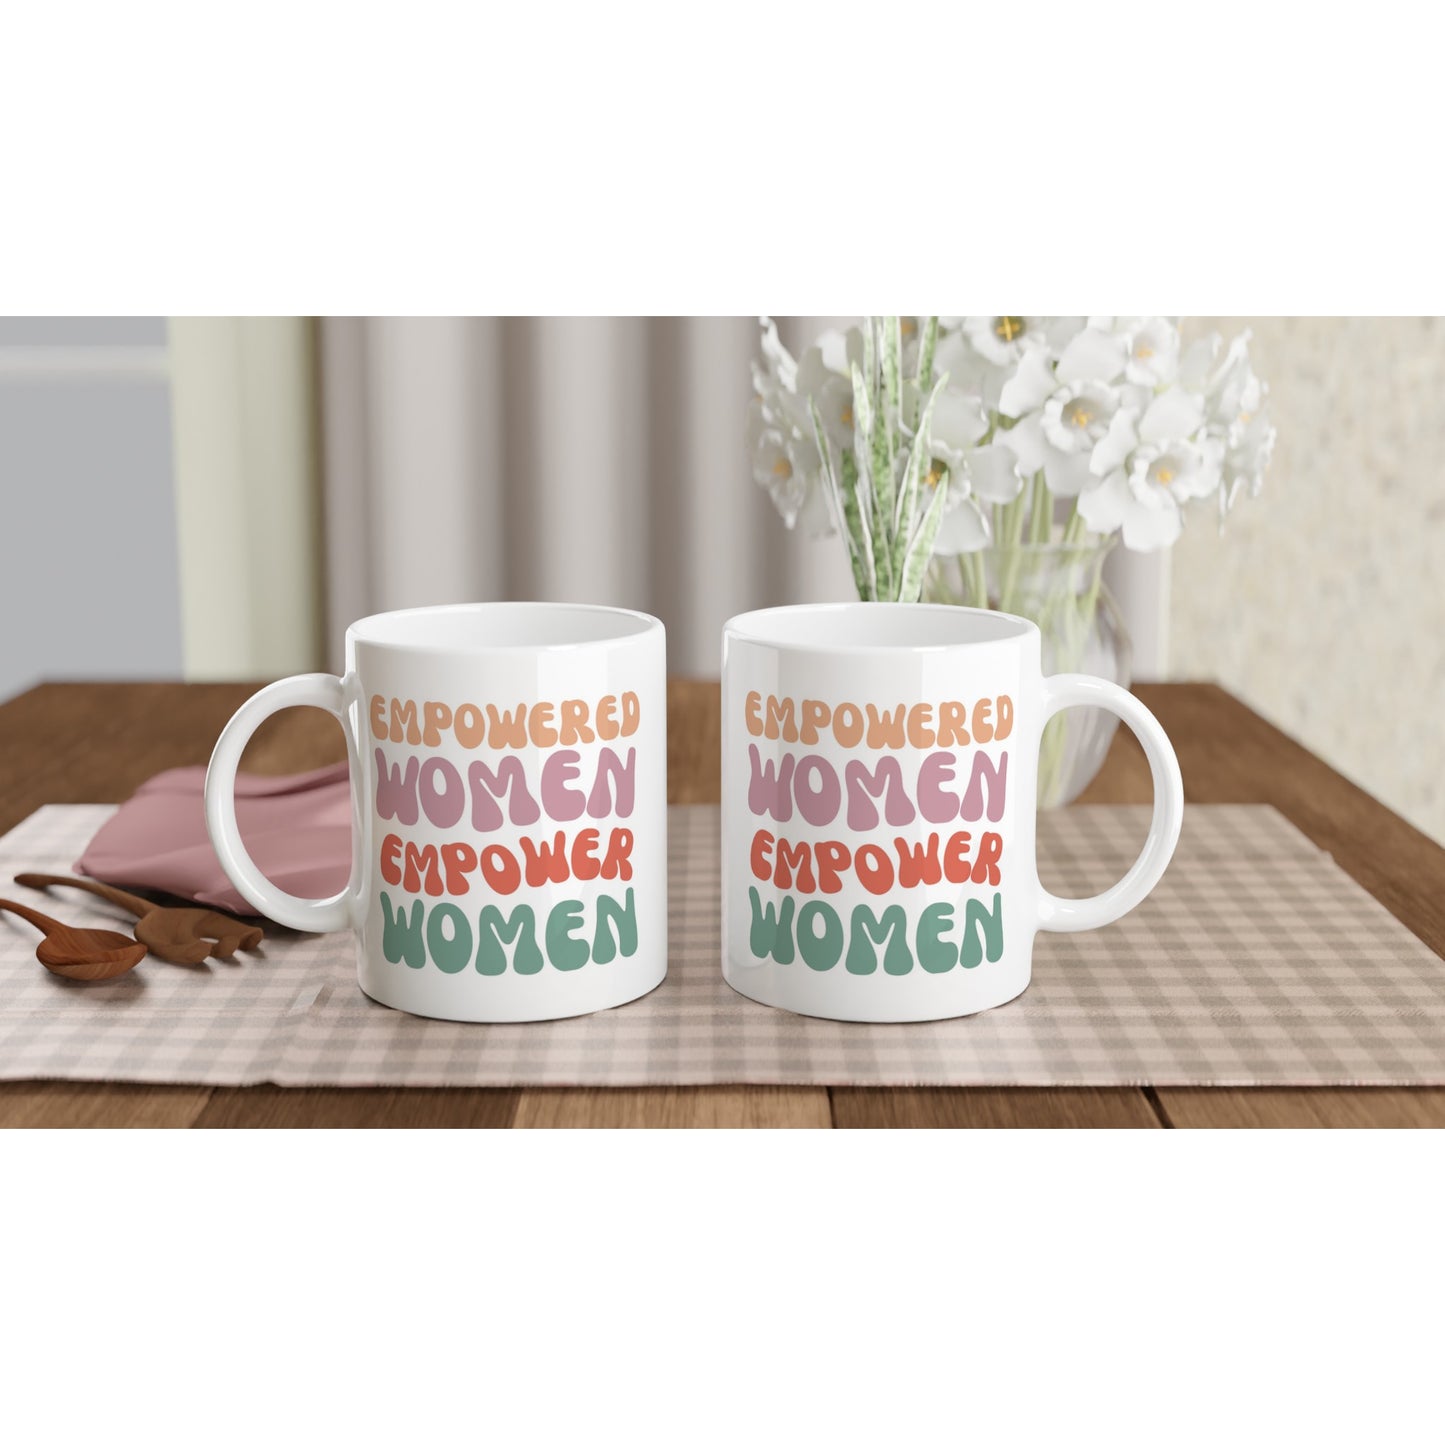 Empowered Women Empower Women - White 11oz Ceramic Mug White 11oz Mug Motivation Positivity